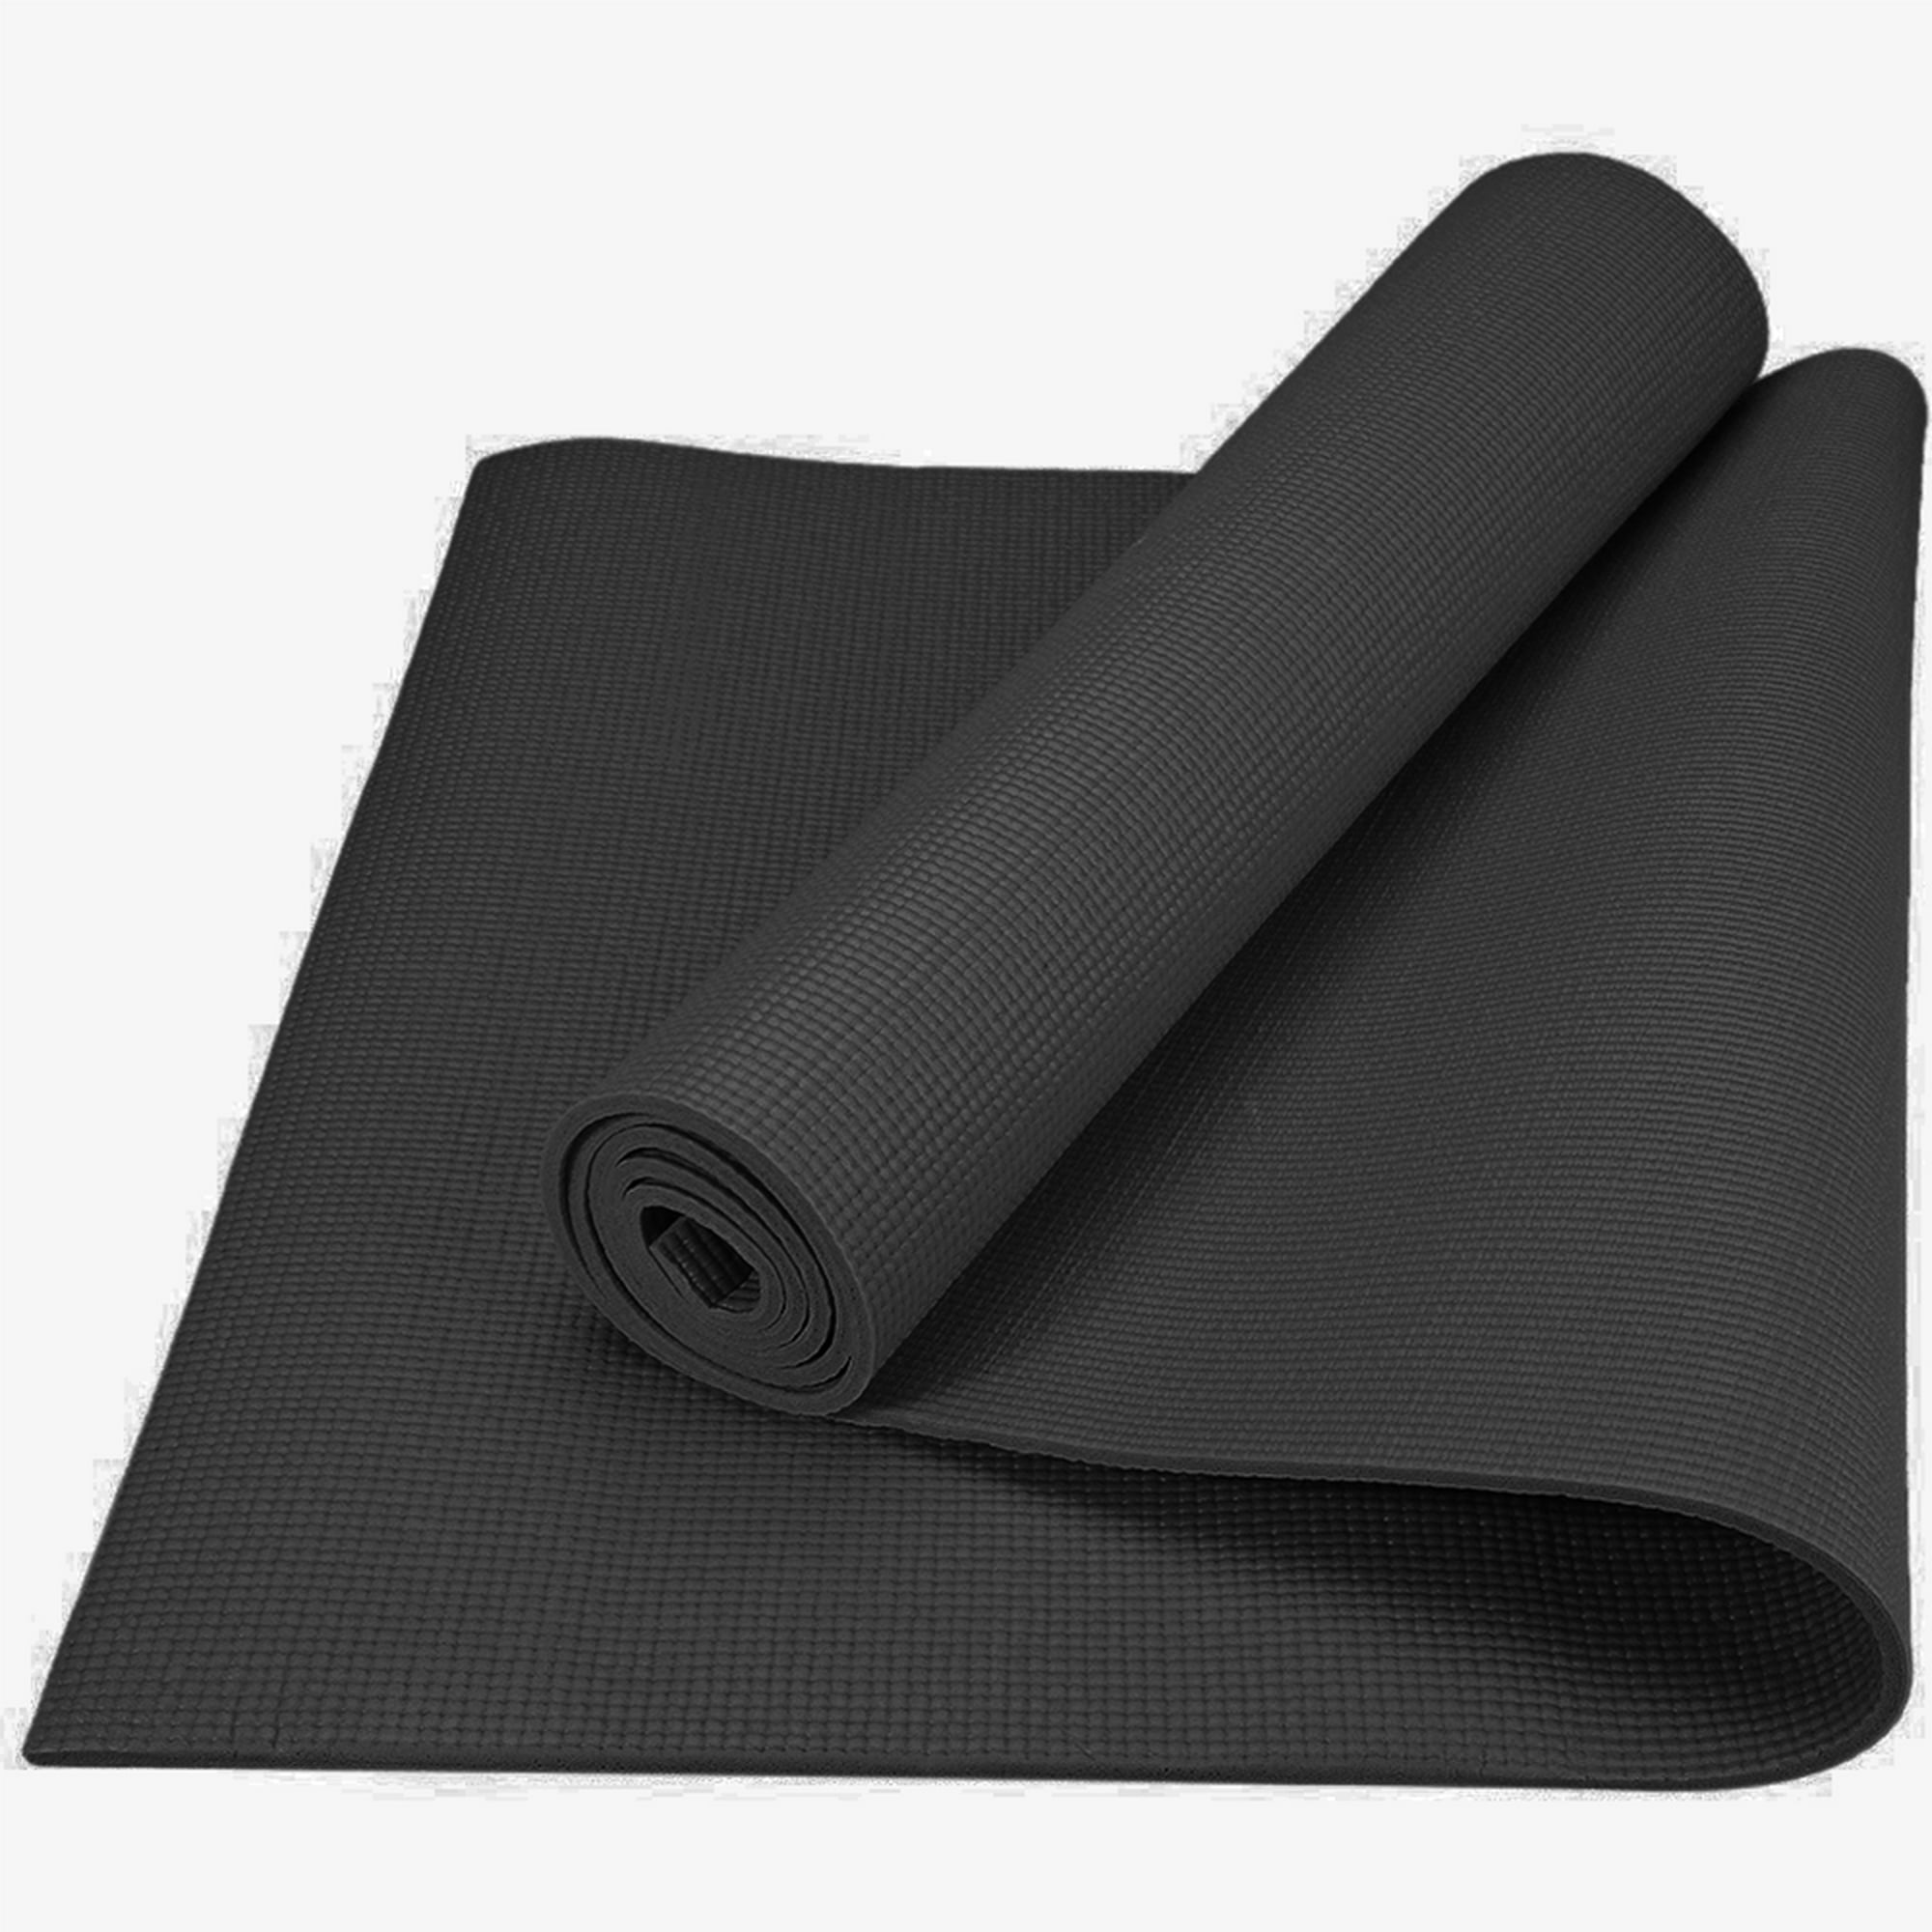 Esterilla de yoga profesional antideslizante con bordes antiadherentes -  0.315 in (3/8 pulgadas) de grosor (negro)